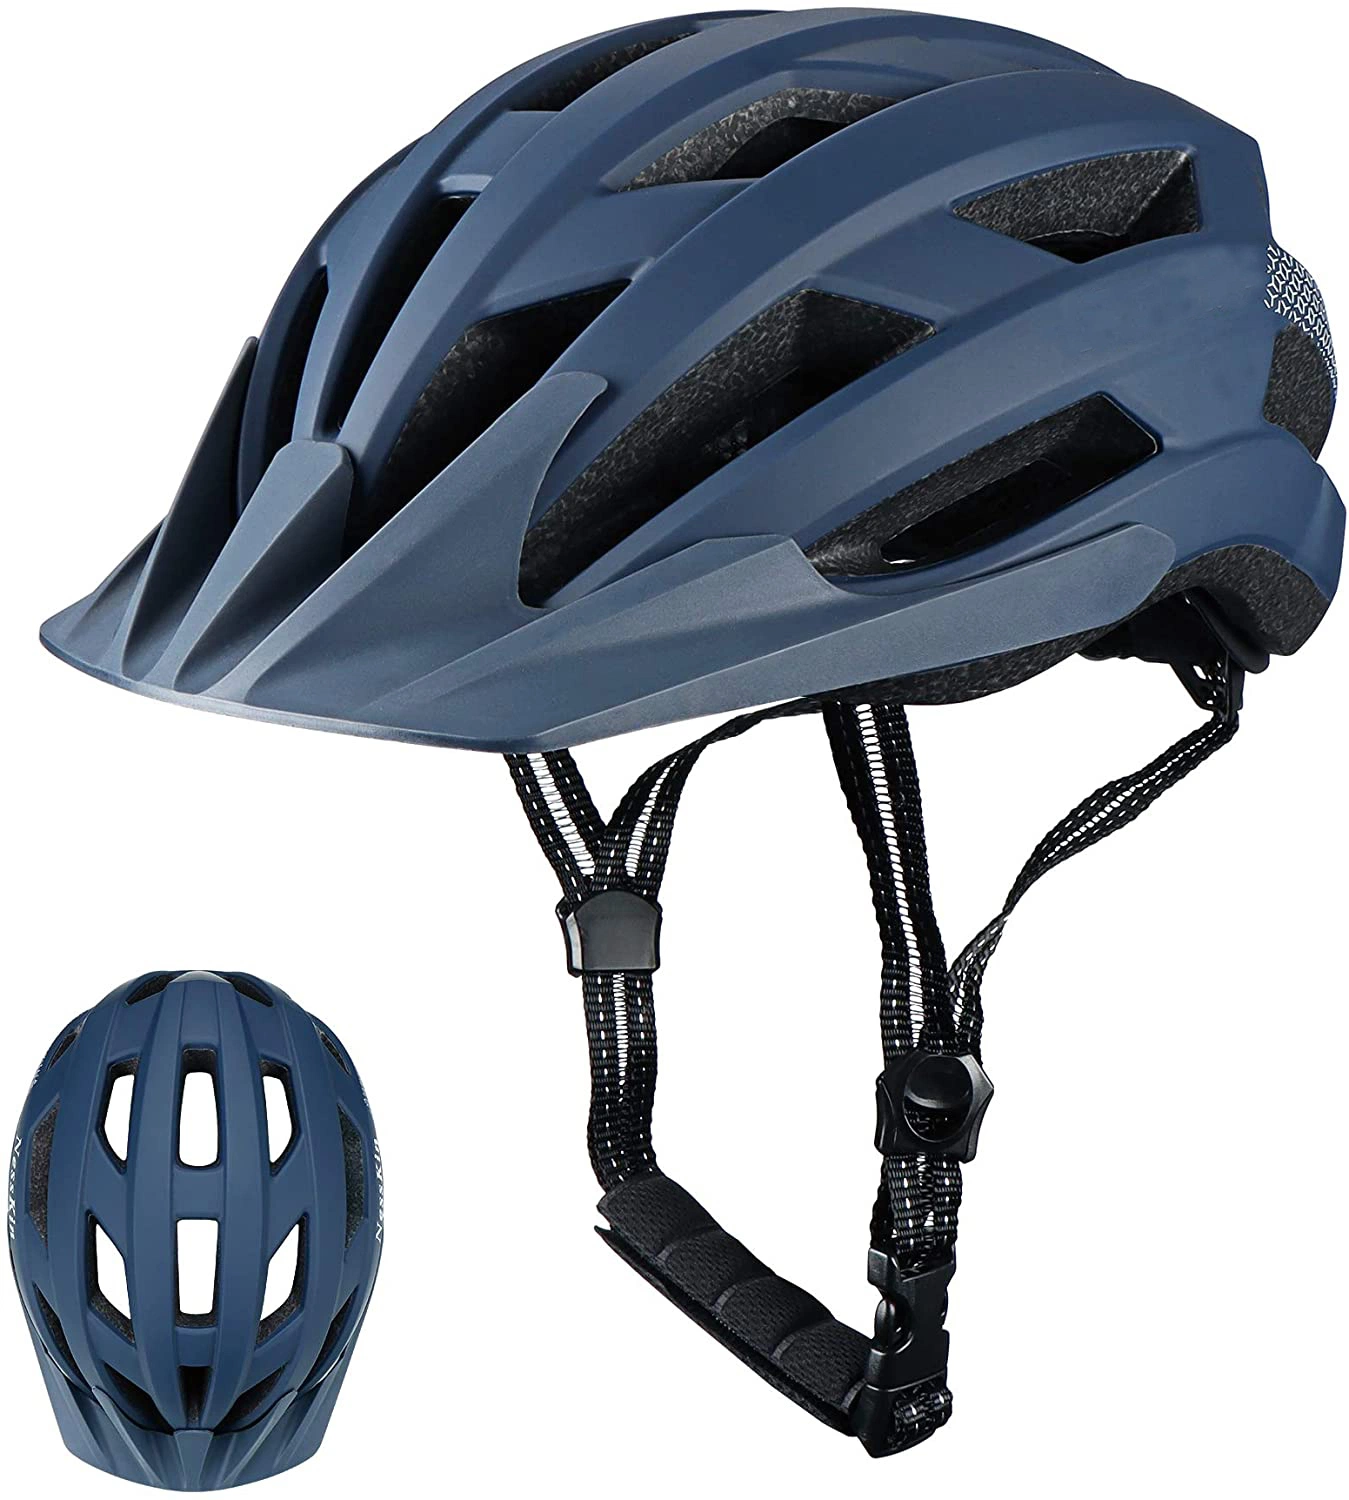 Custom High Quality Head Protection Helmet Bike Outdoor Sports Adjustable Road Bicycle Helmet for Adult Teen